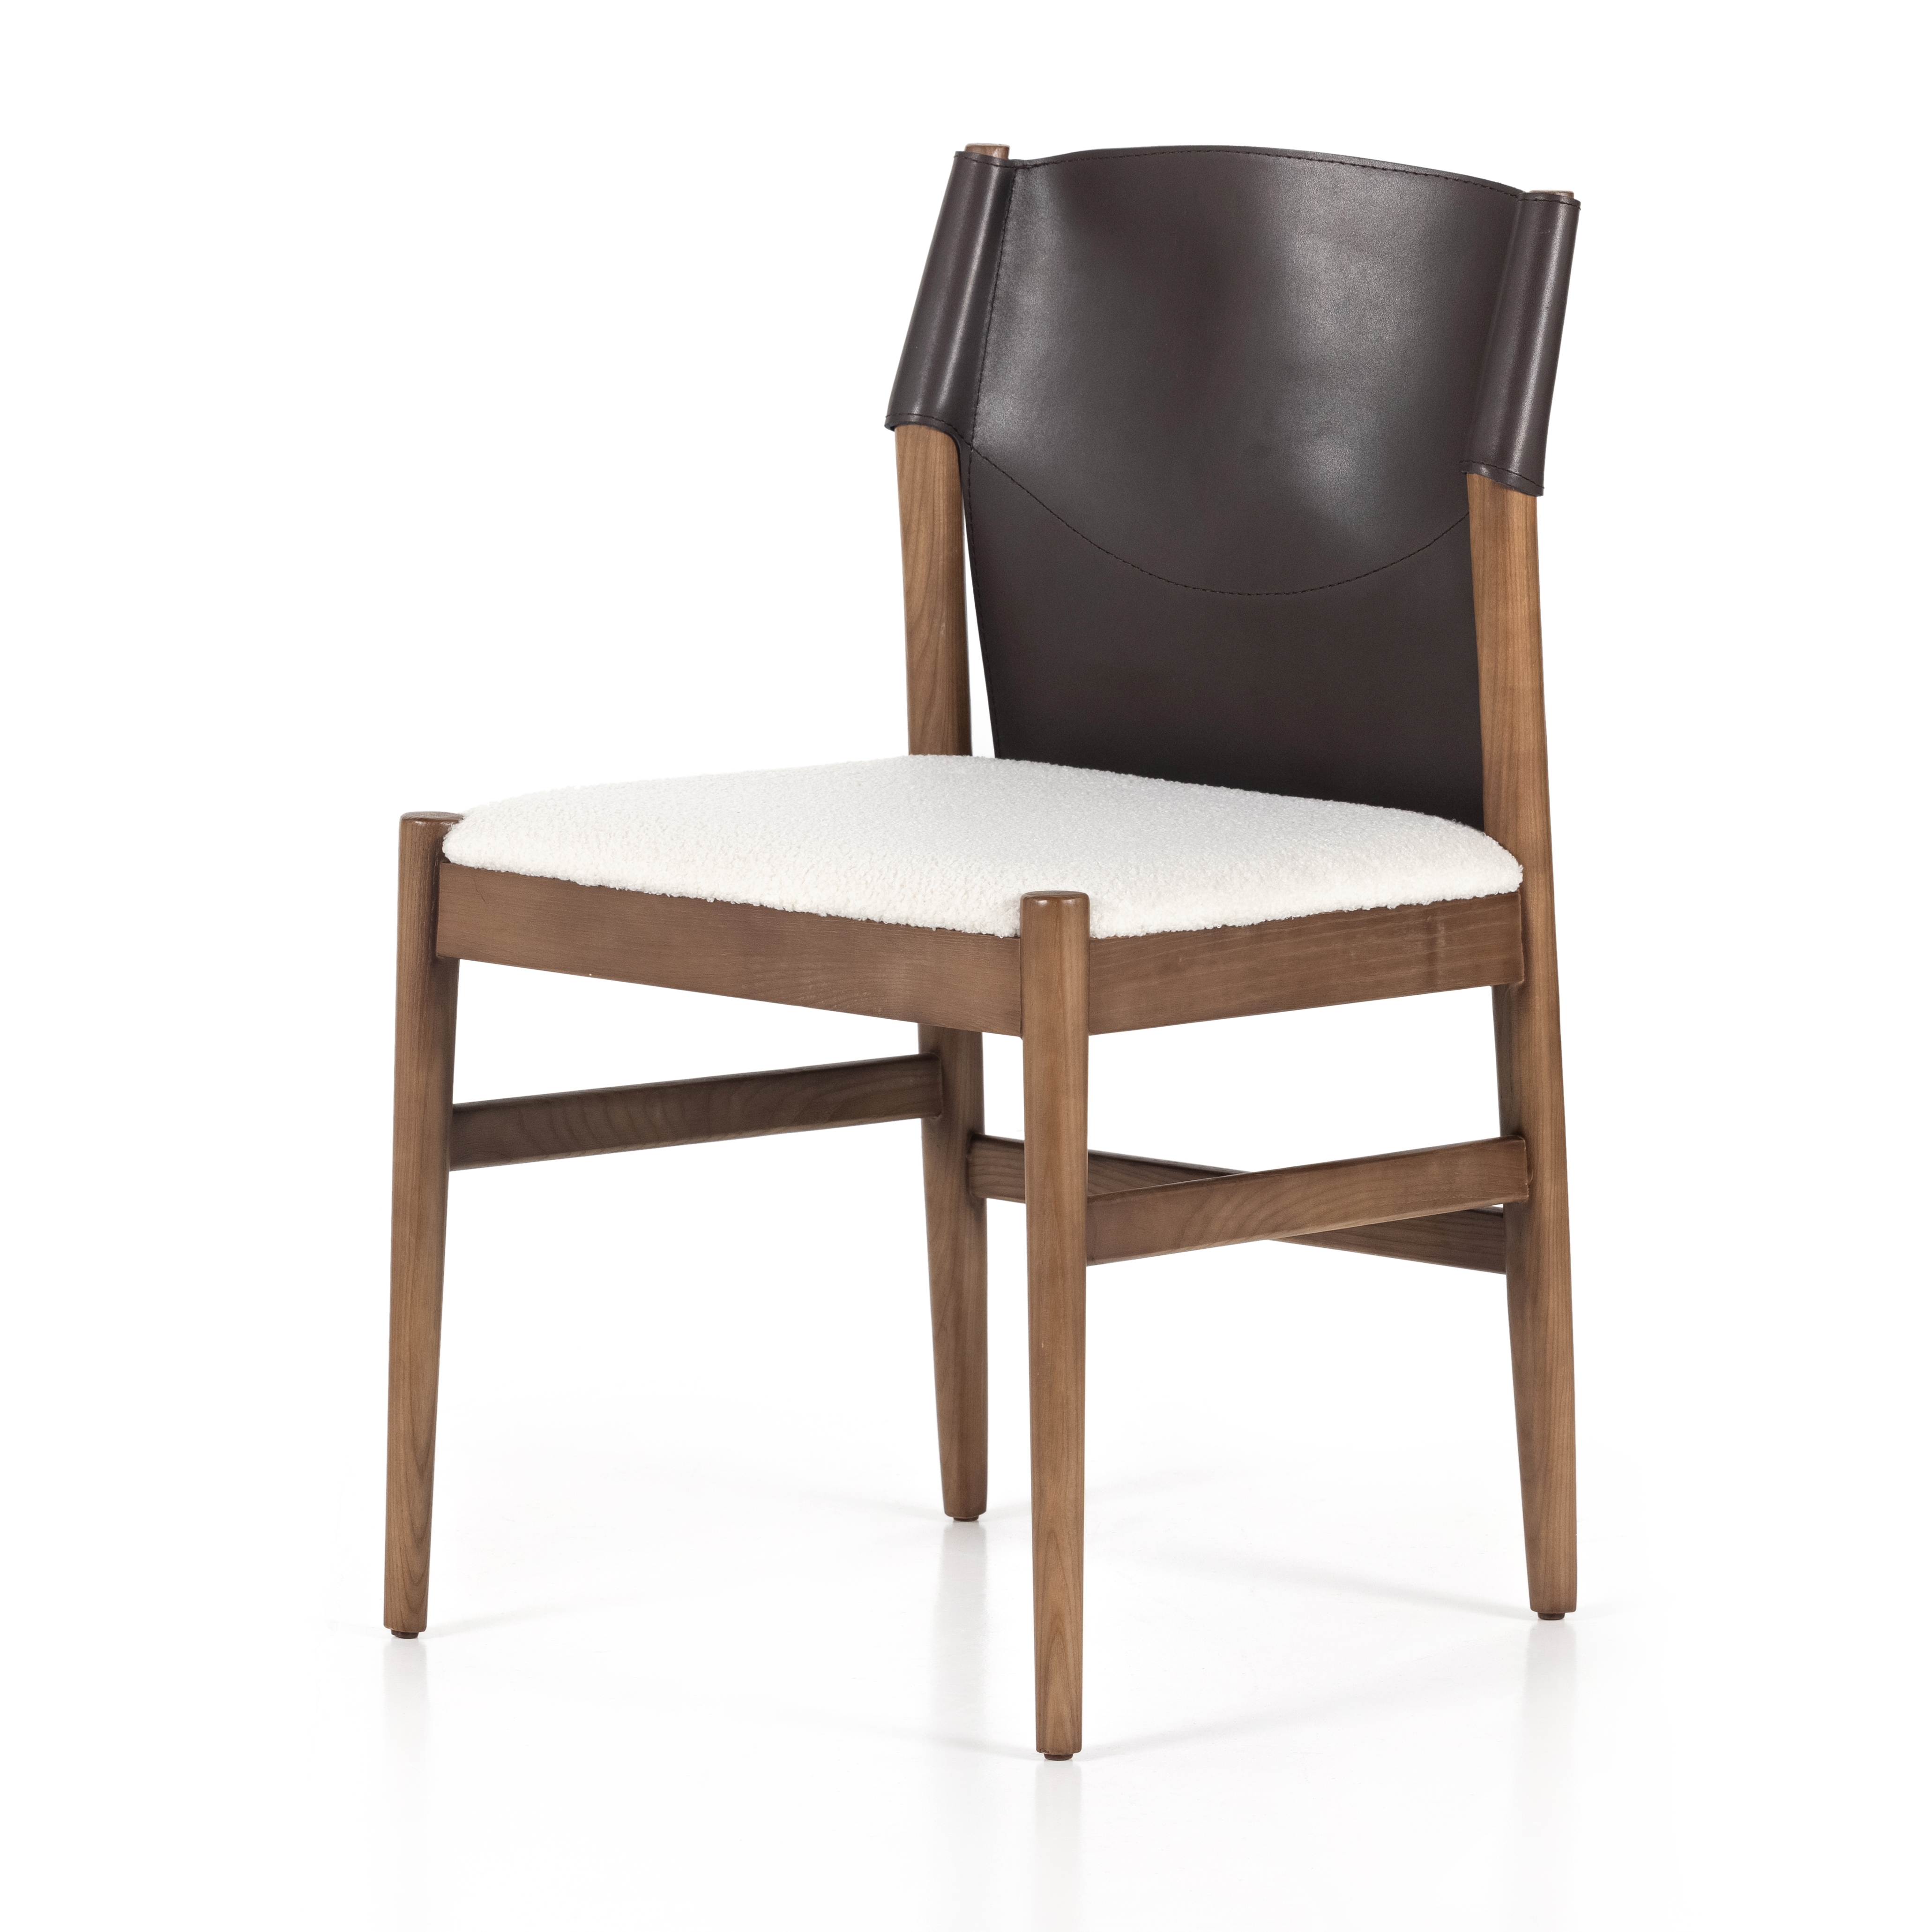 Lulu Armless Dining Chair-Espresso Lthr - Image 0